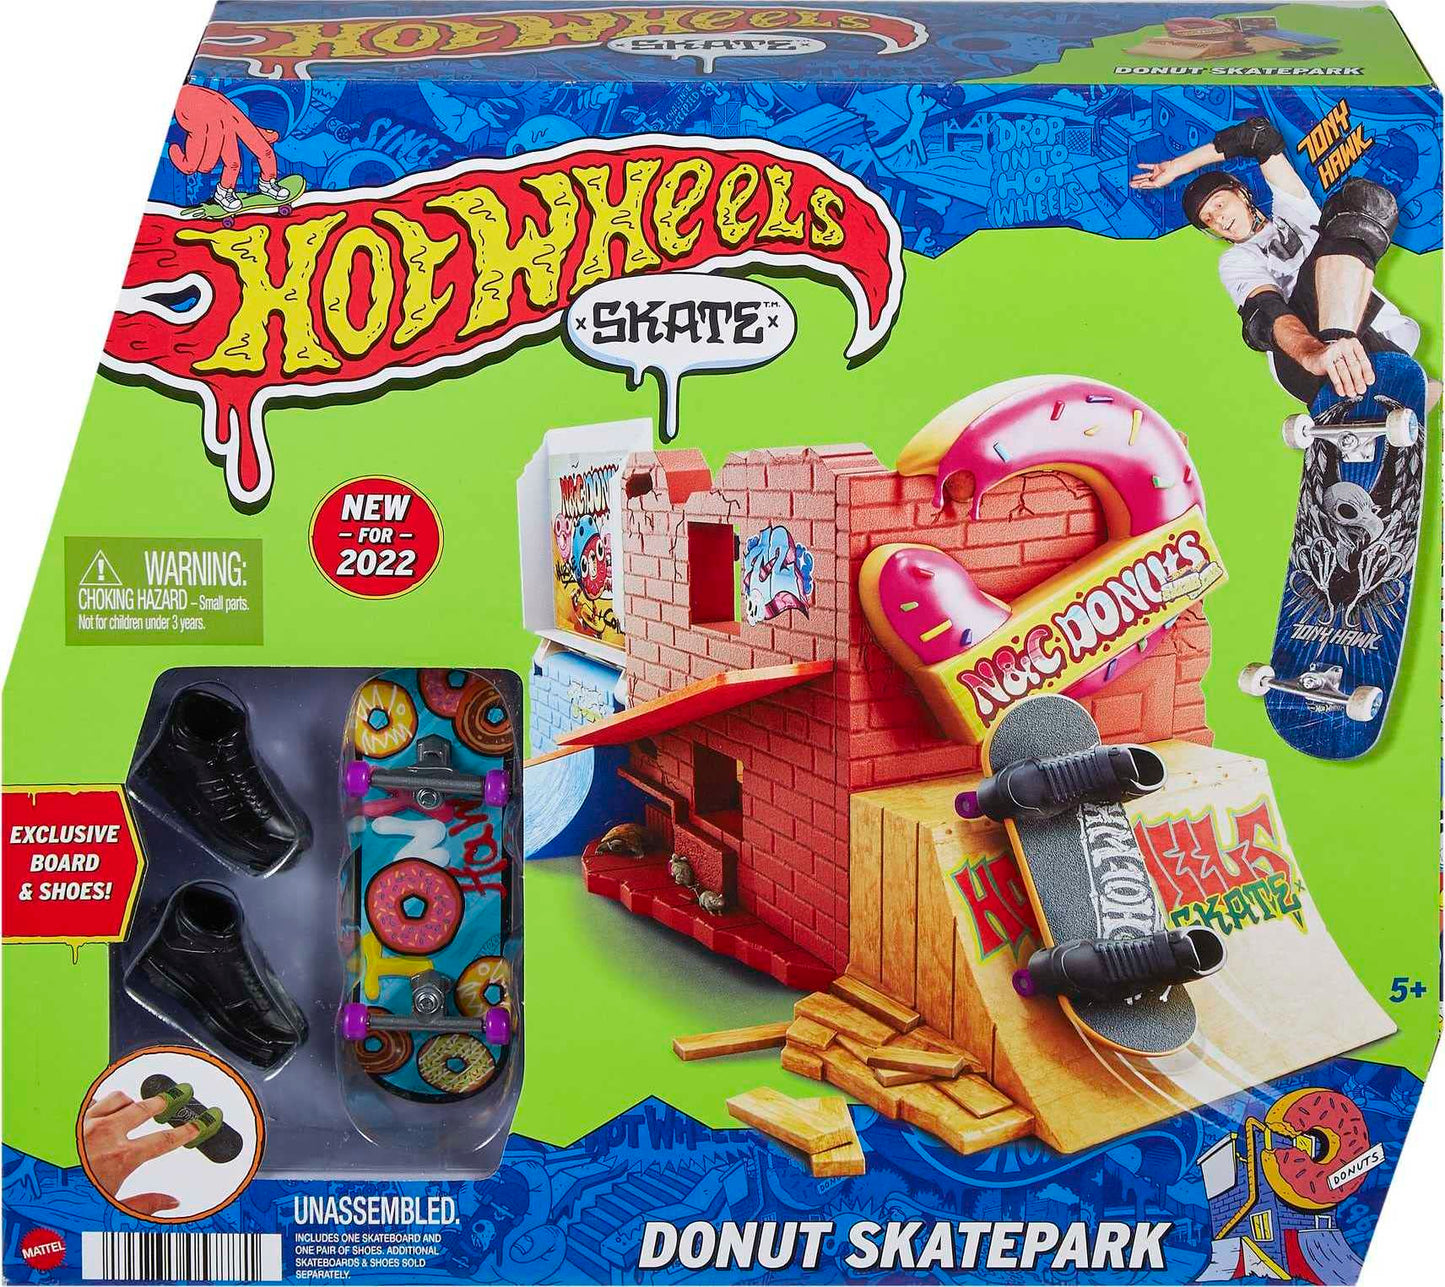 Hot wheels Donut Skatepark Tony Hawk